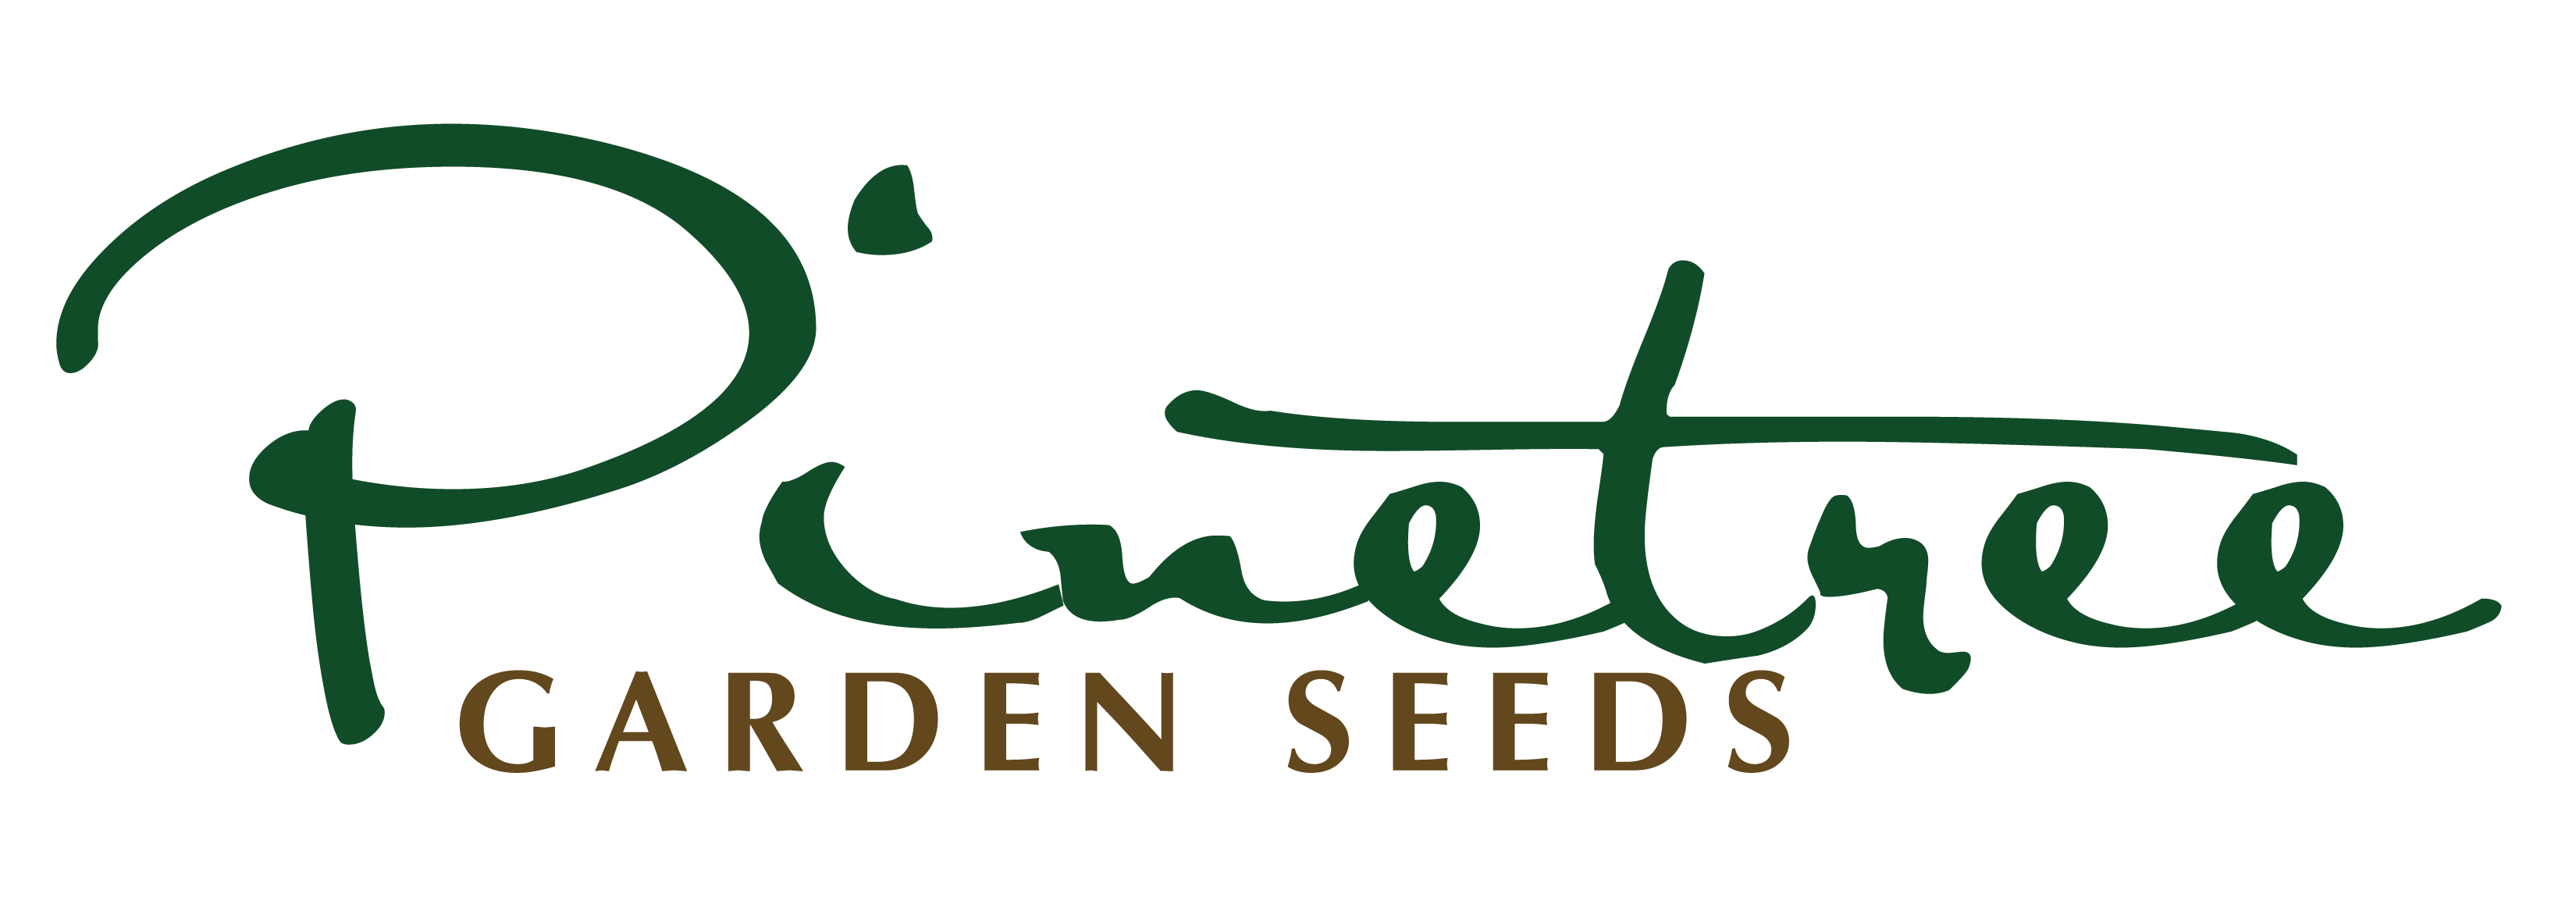 Upland Cress (40 Days) – Pinetree Garden Seeds